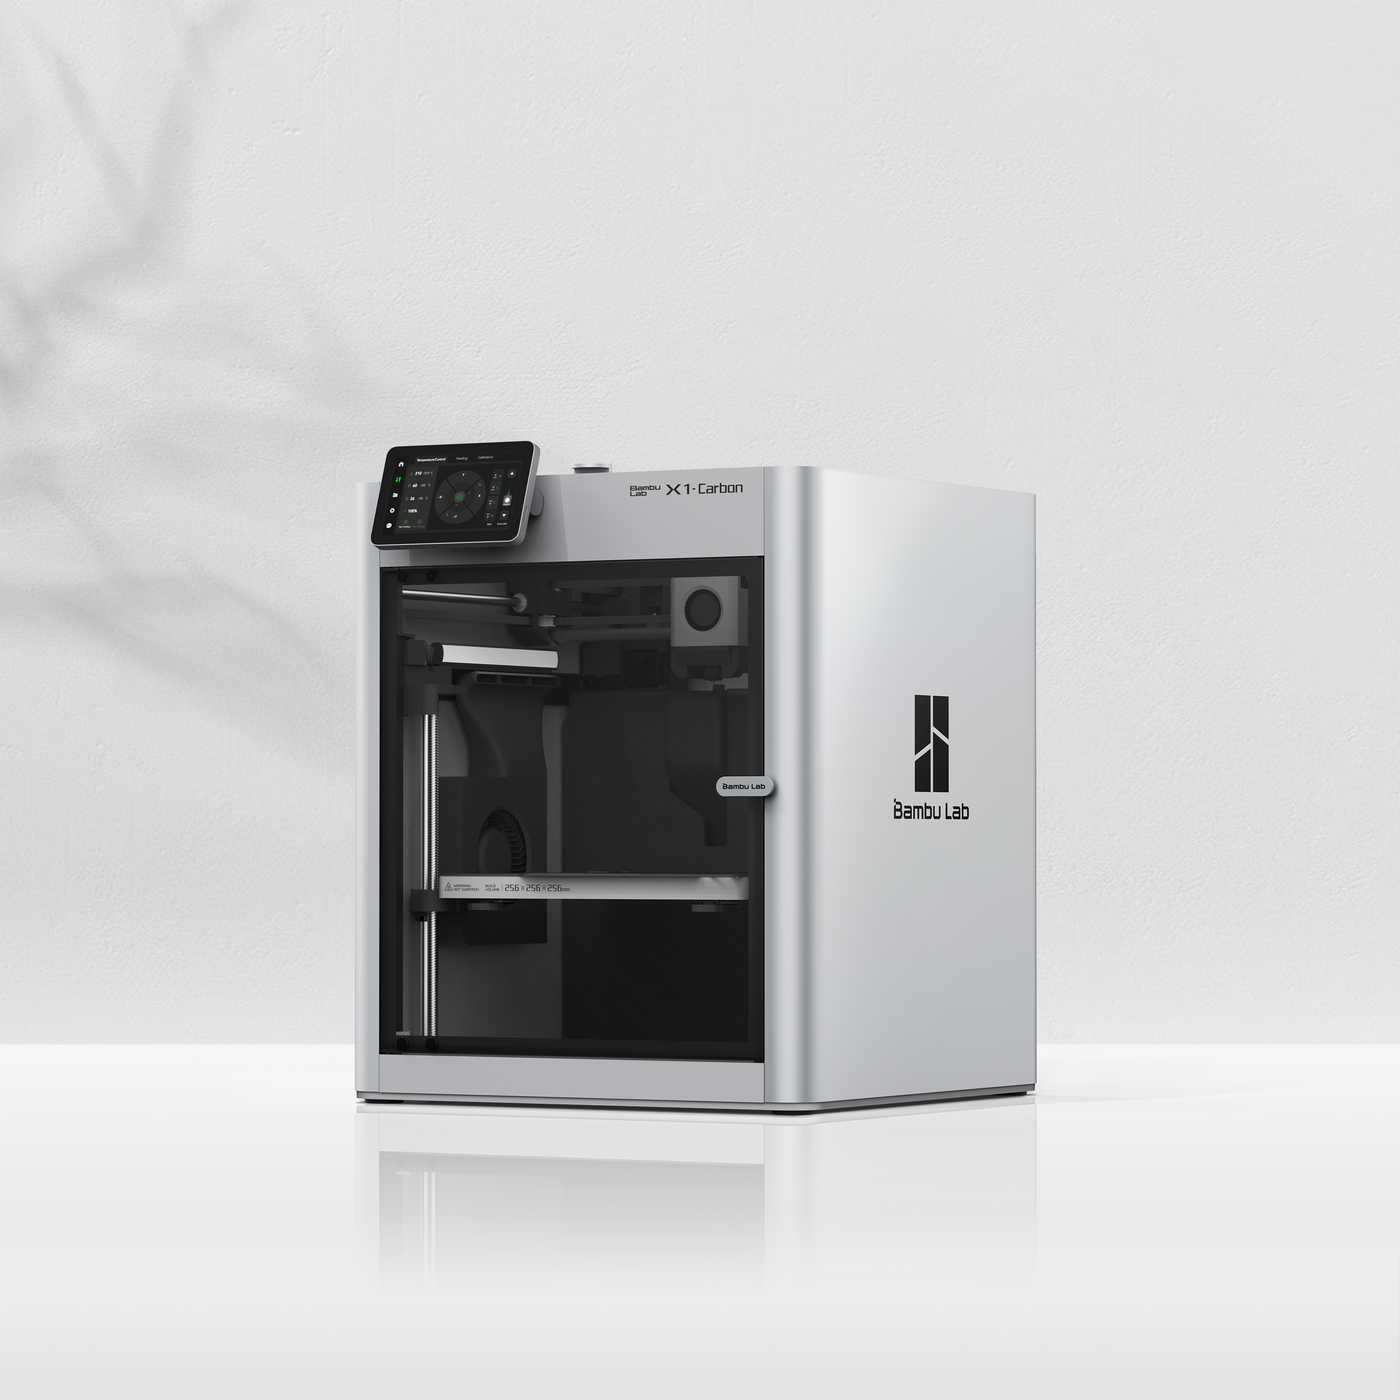 Bambu Lab X1-Carbon review - Professional 3D printer